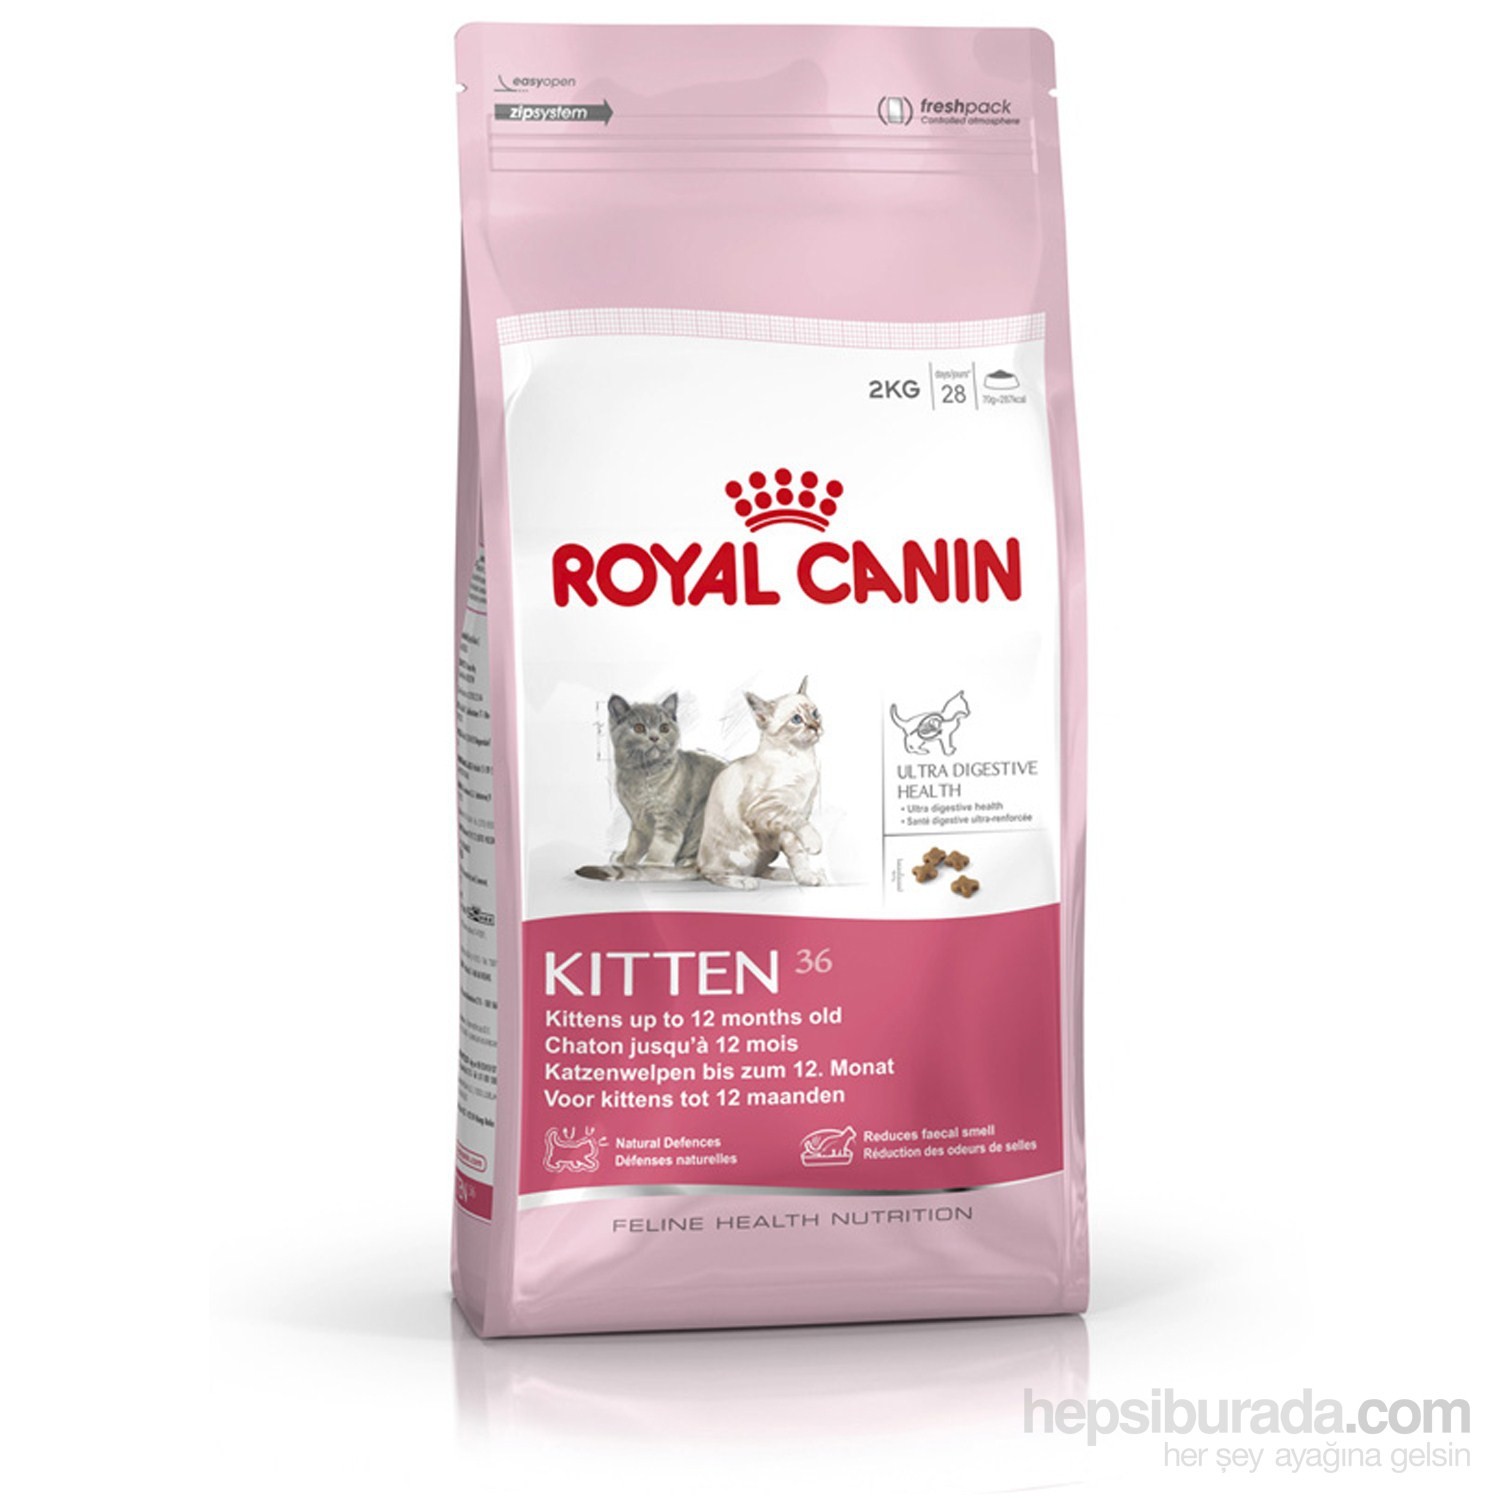 Royal canin для кошек sterilised. Babycat Роял Канин 400+400. Сухой корм для кошек Роял Канин. Корм для стерилизованных кошек Royal Canin. Роял Канин Киттен 4 кг.